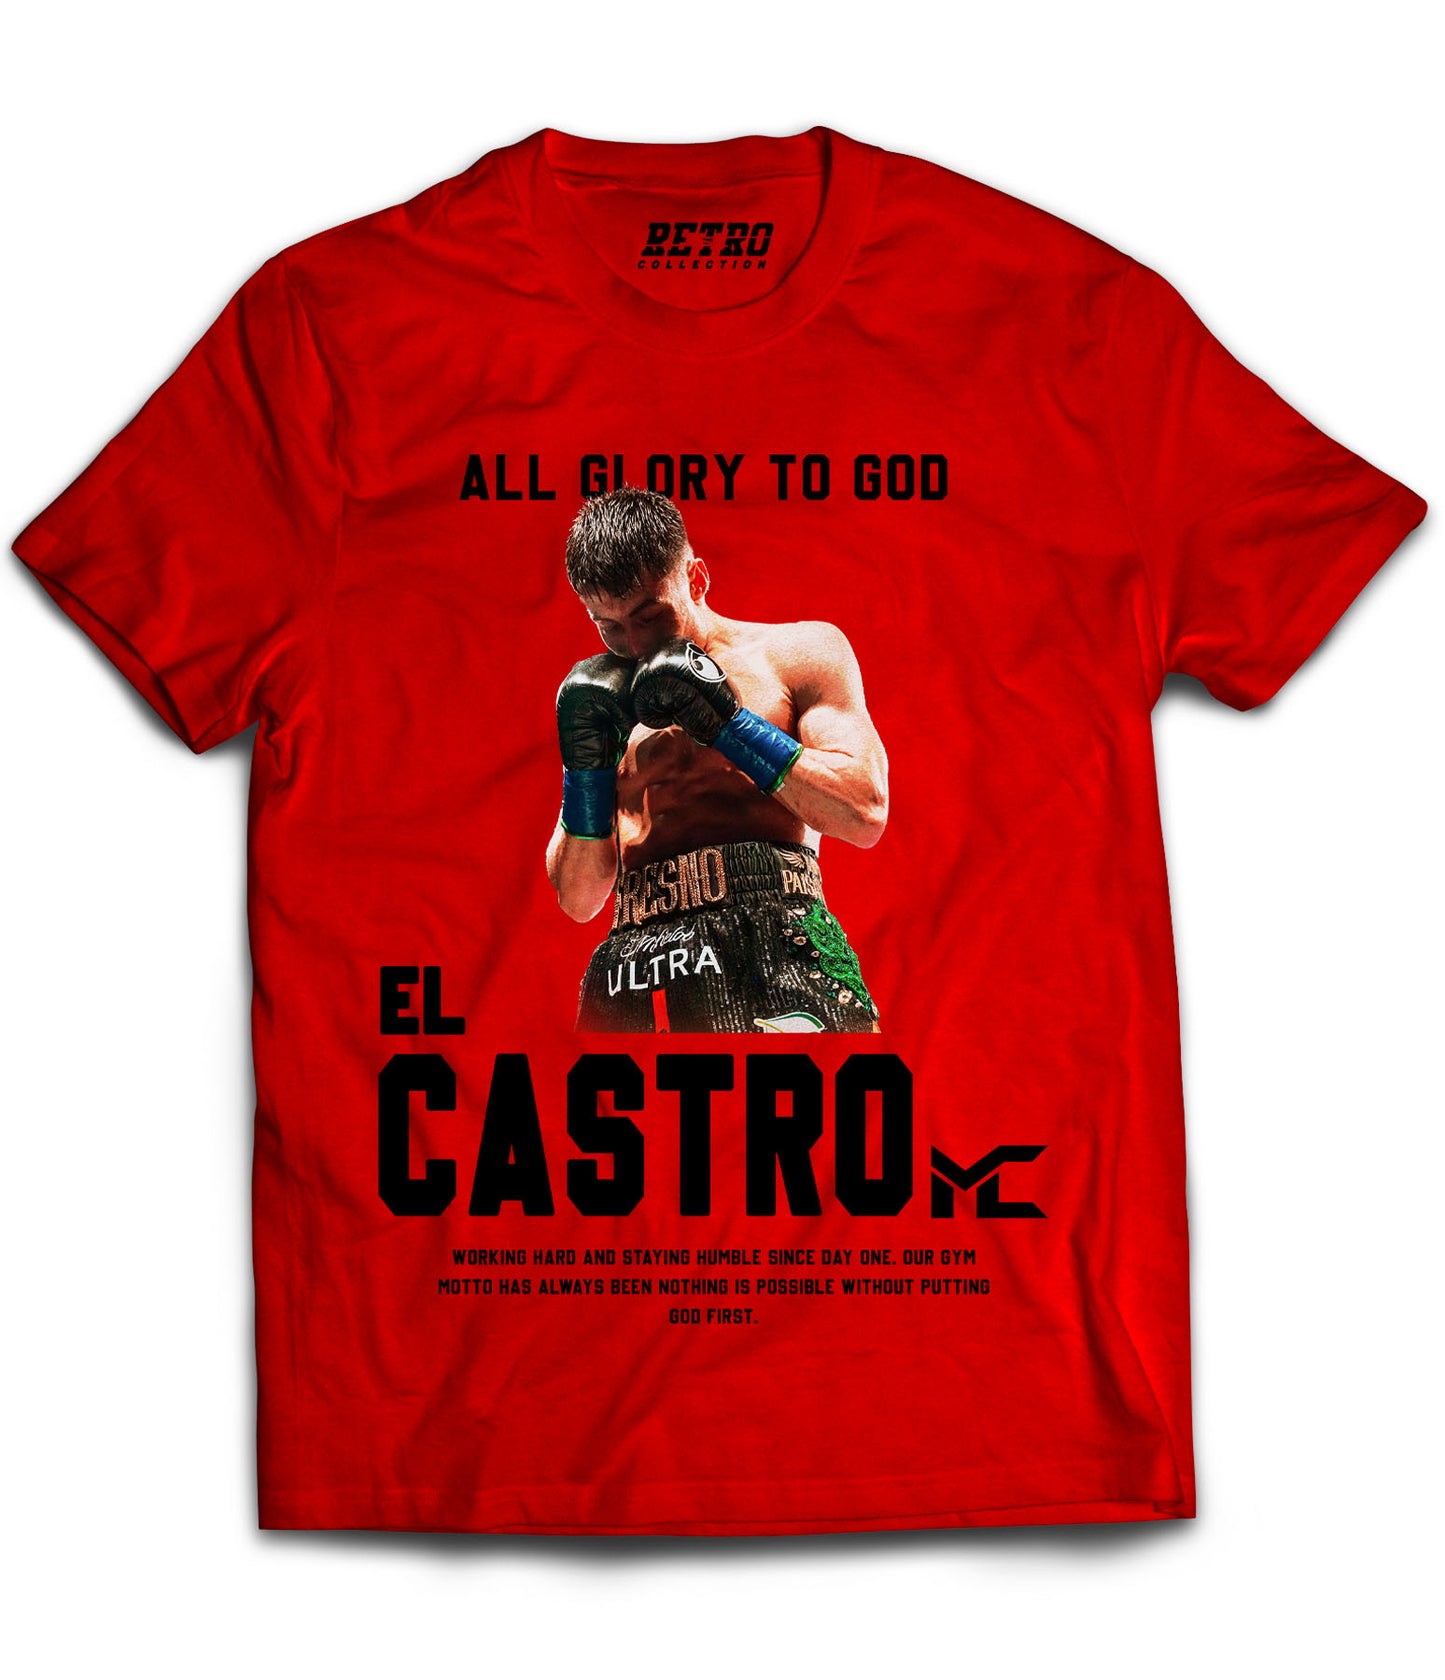 Marc Castro "El Castro" Tribute Shirt *LIMITED EDITION* (Black, Gray, Red, White)